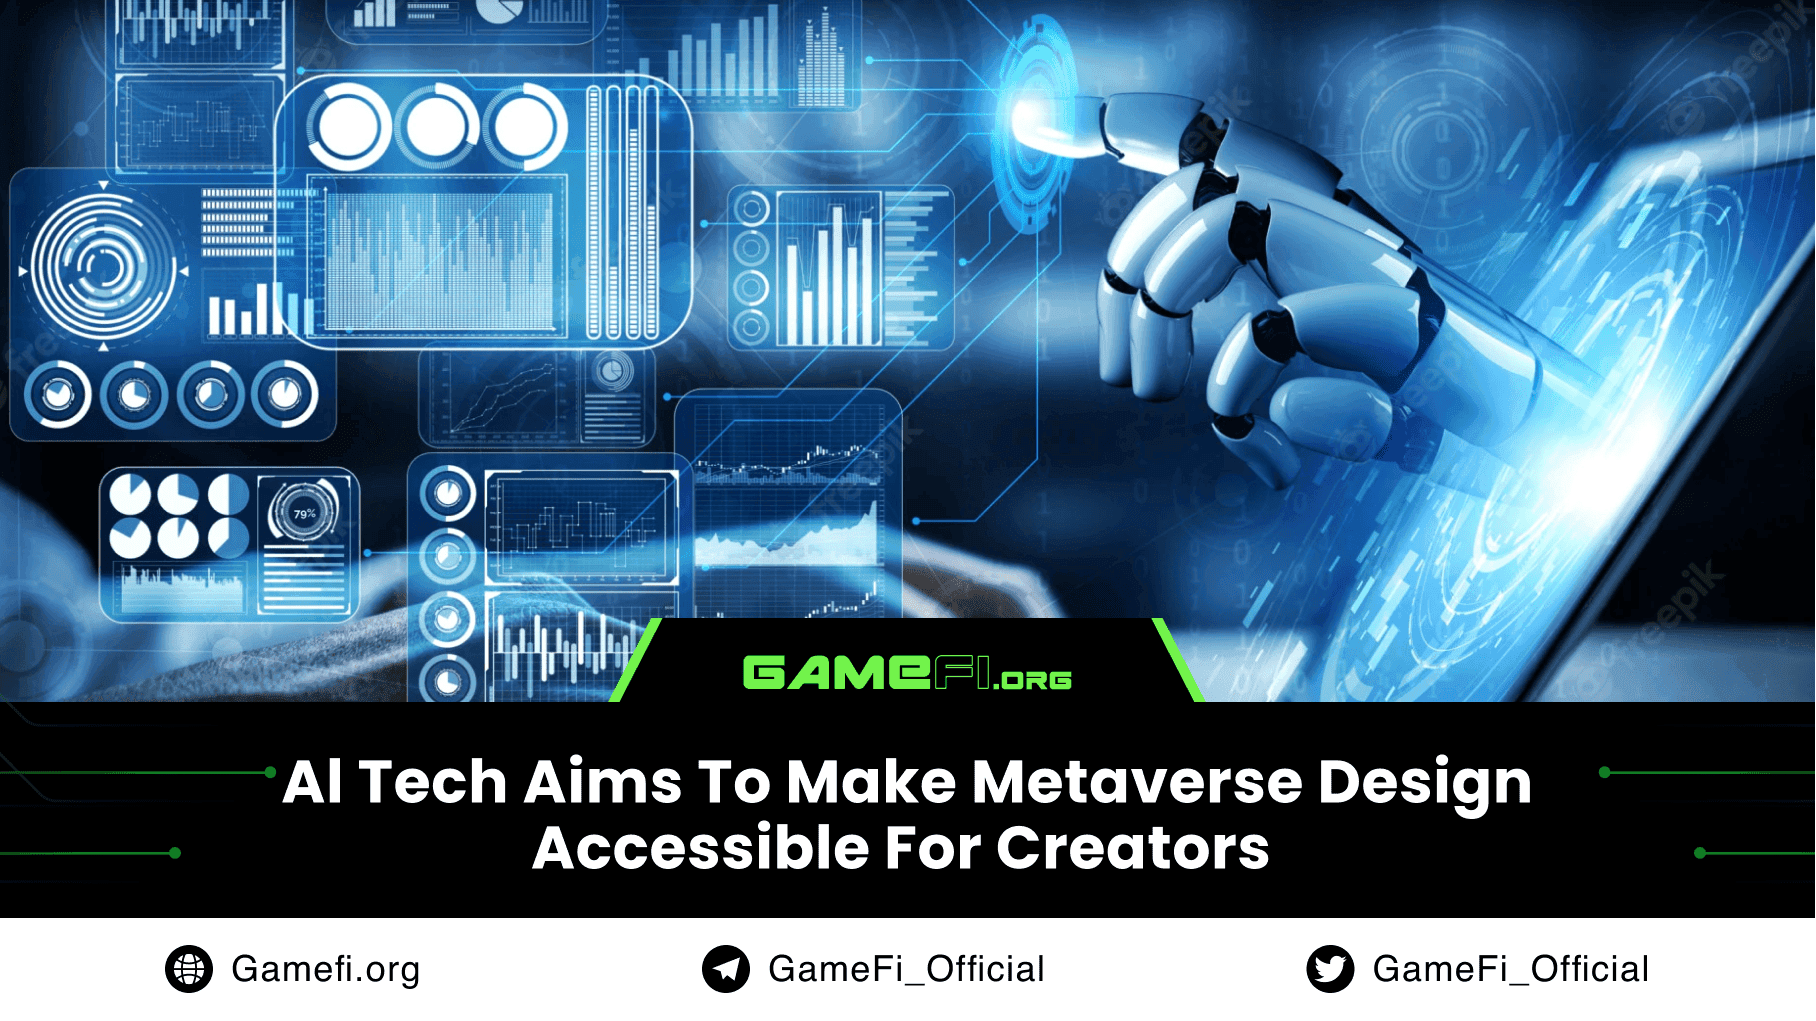 Al Tech Aims to Make Metaverse Design Accessible for Creators